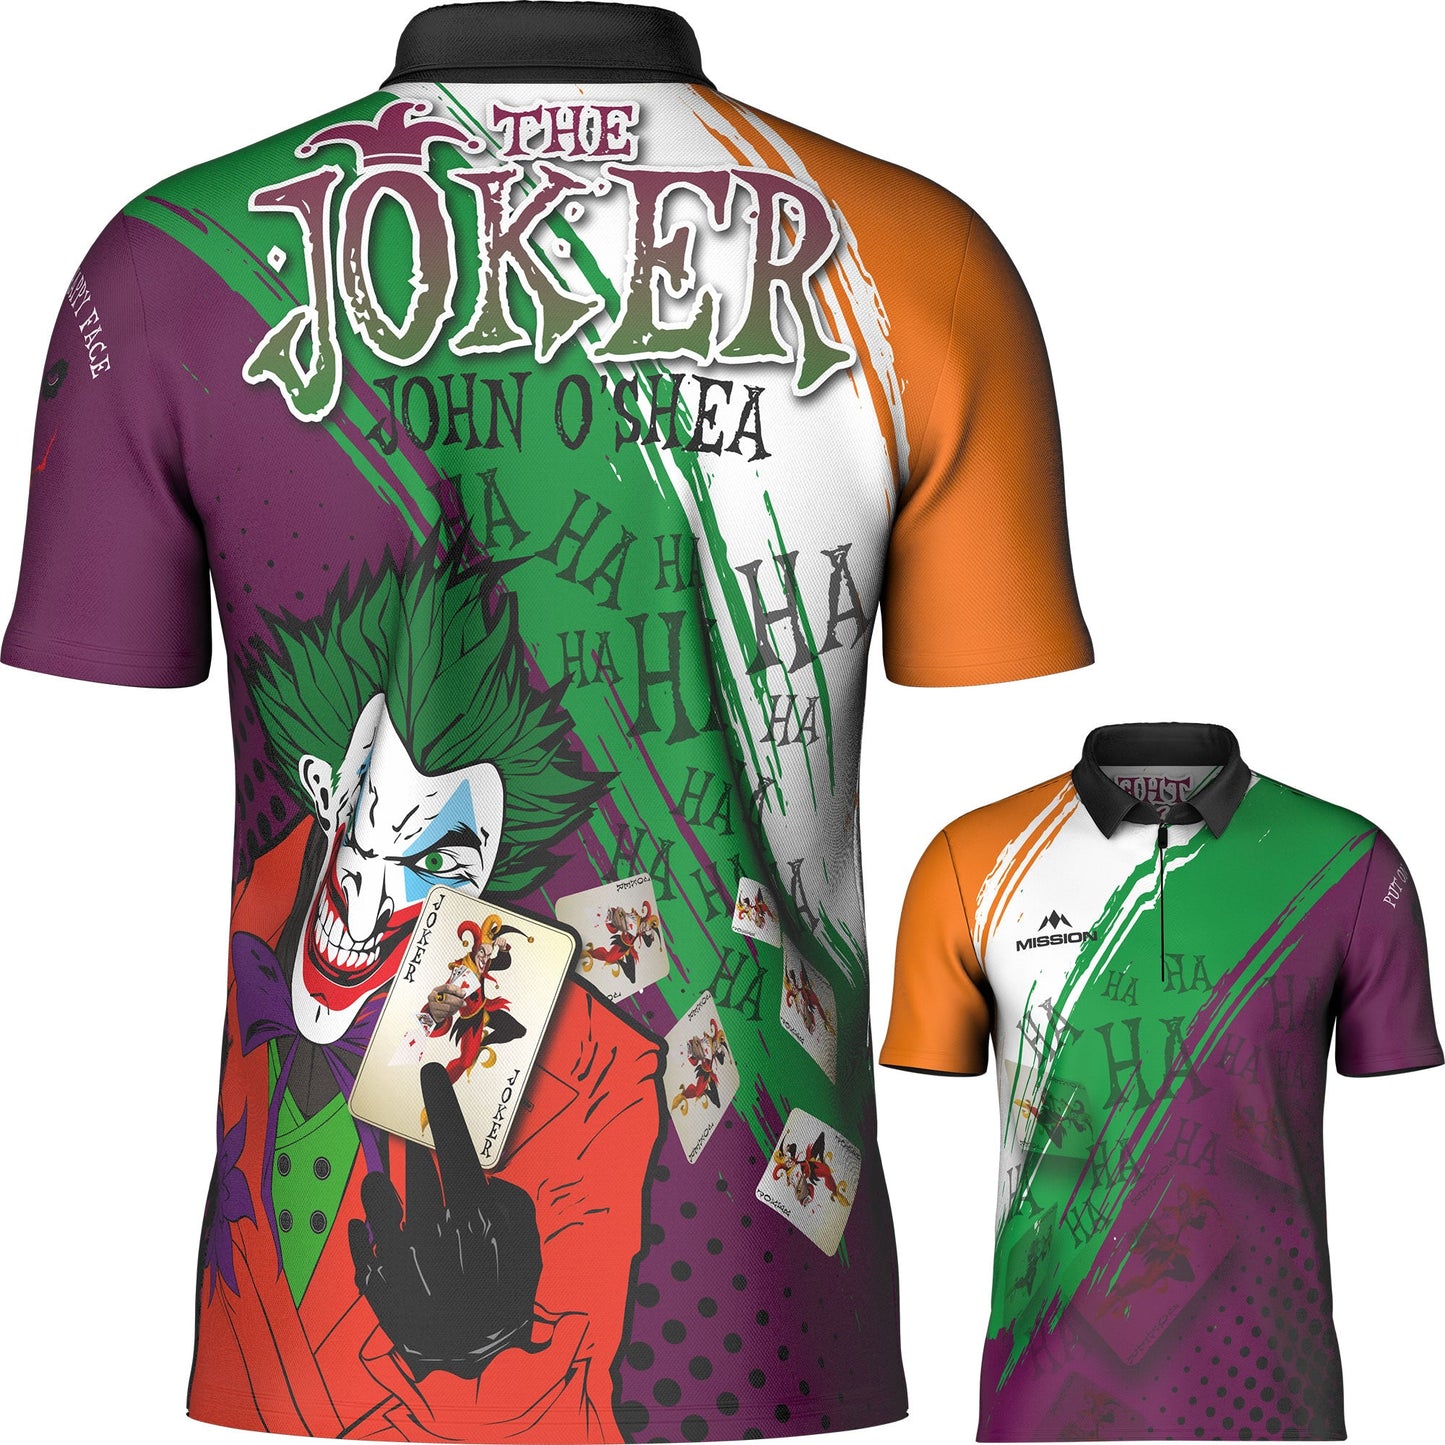 Mission Player Dart Shirt - John O'Shea - The Joker